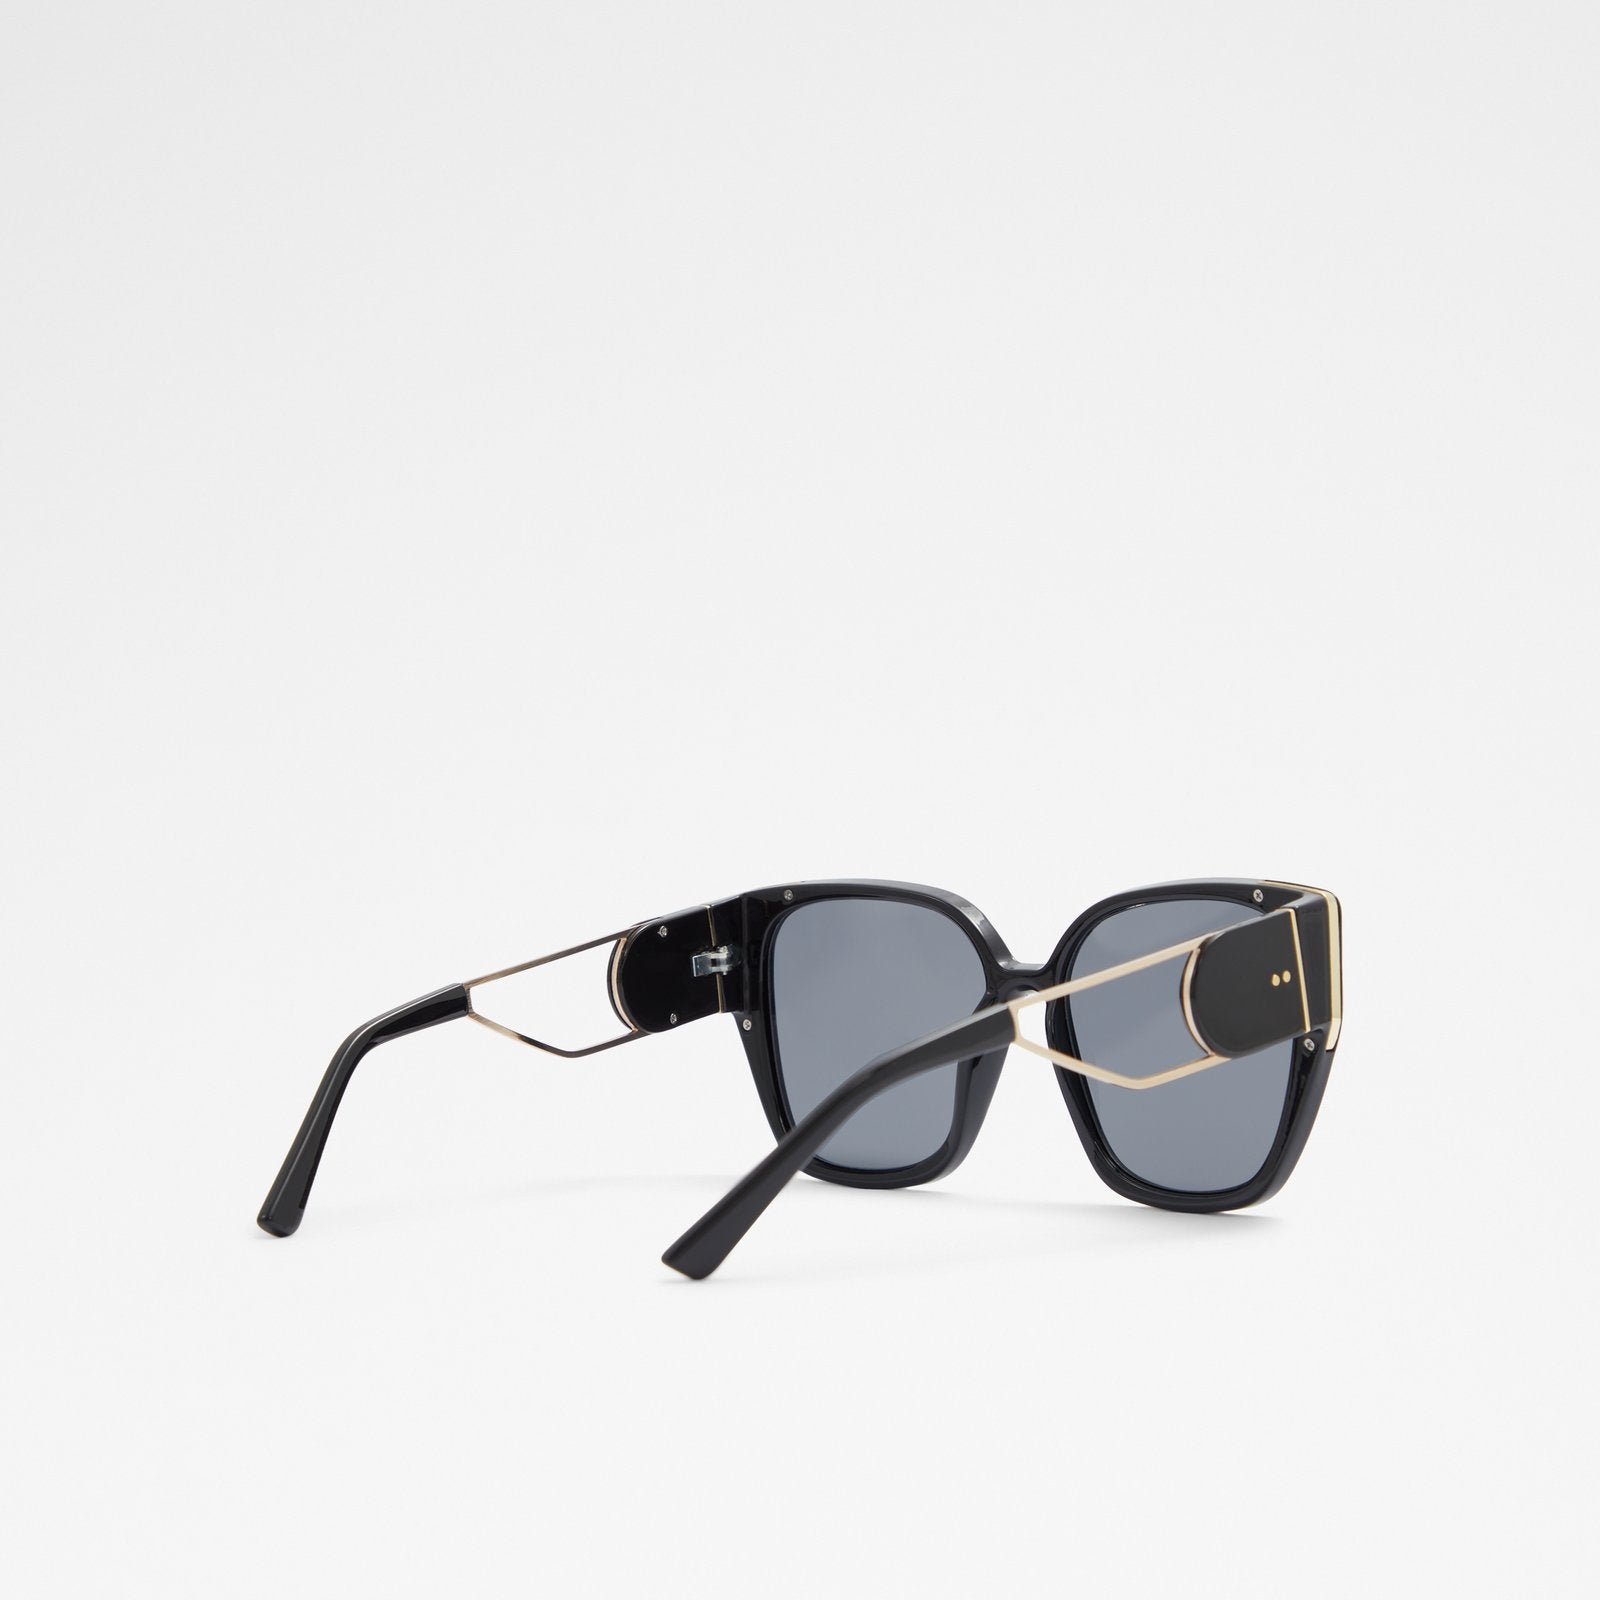 Devobanna  / Sunglasses